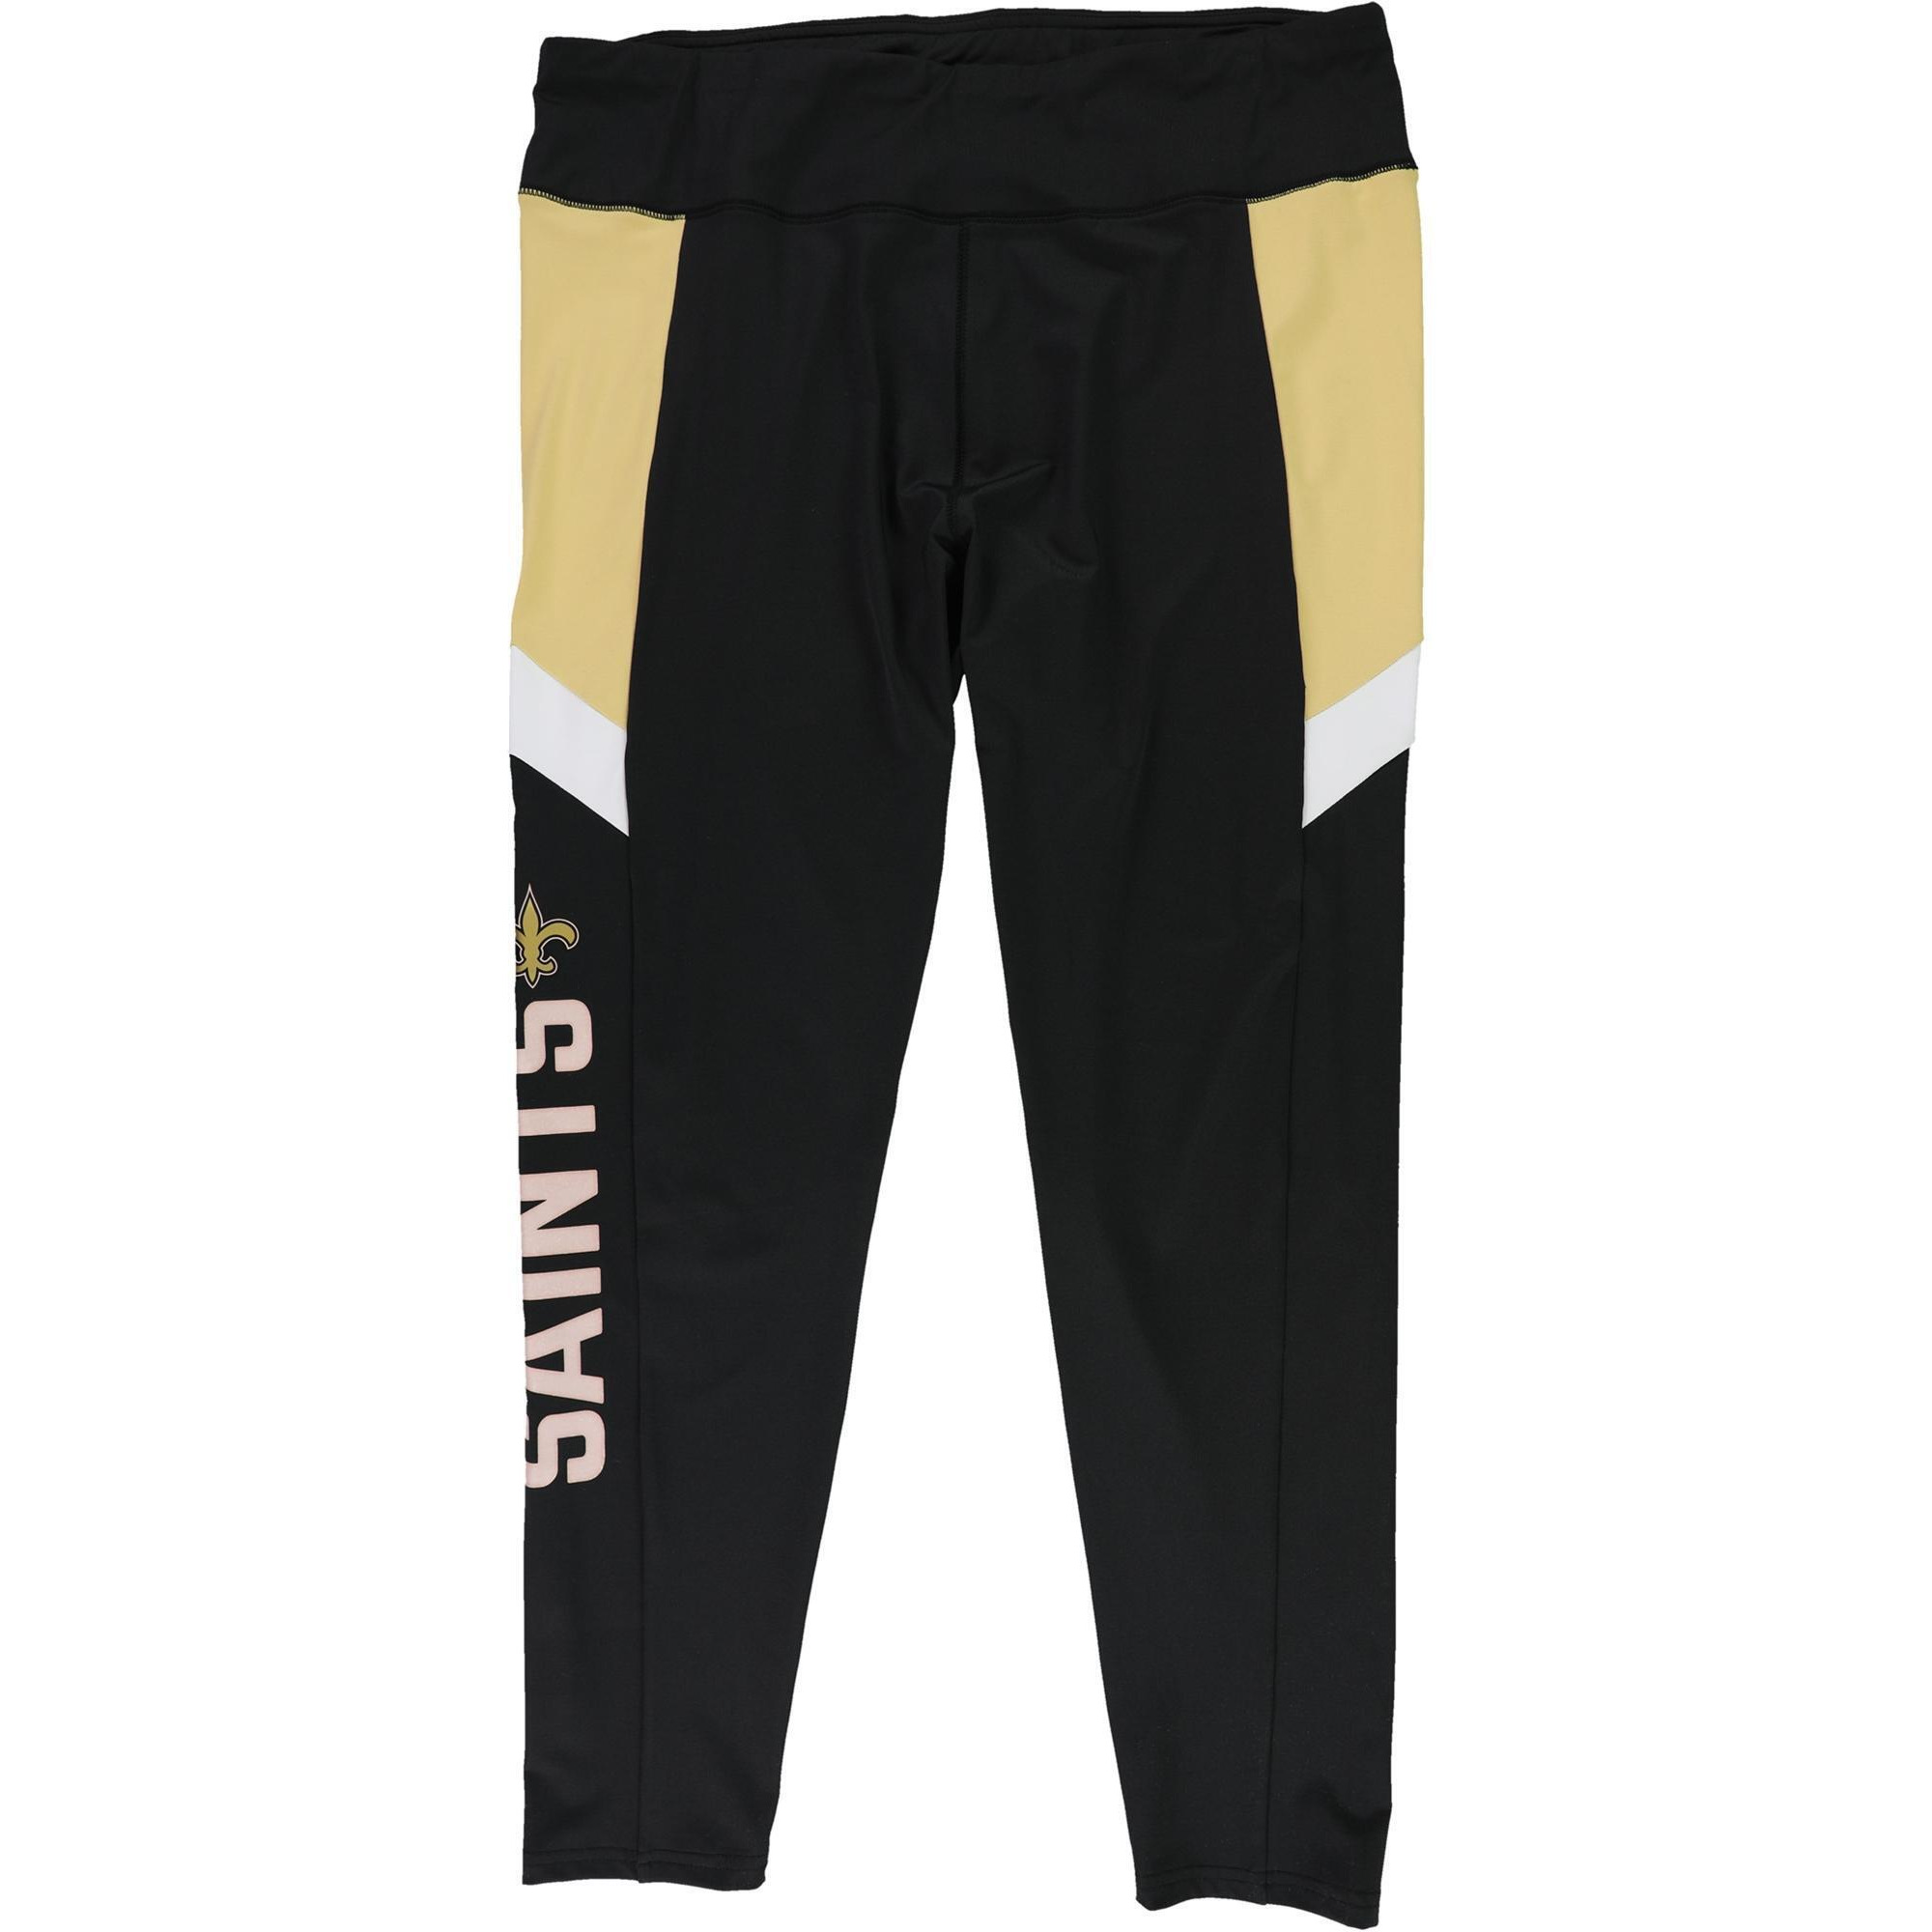 NFL Womens New Orleans Saints Compression Athletic Pants, Style # 6J900938 alternate image